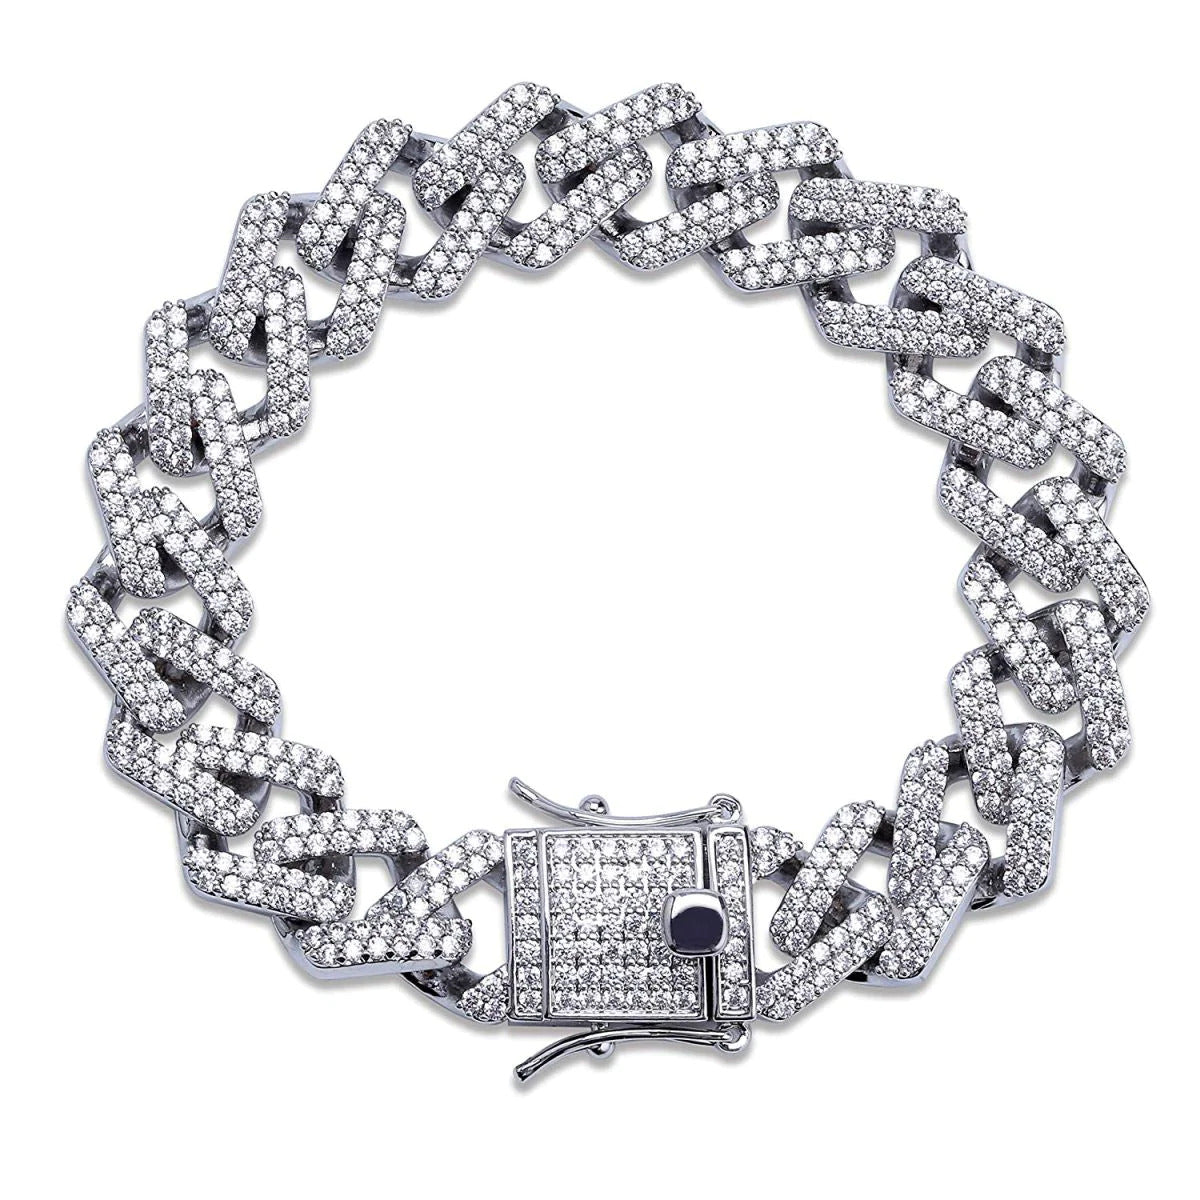 Designer zirconia studded men's bracelet